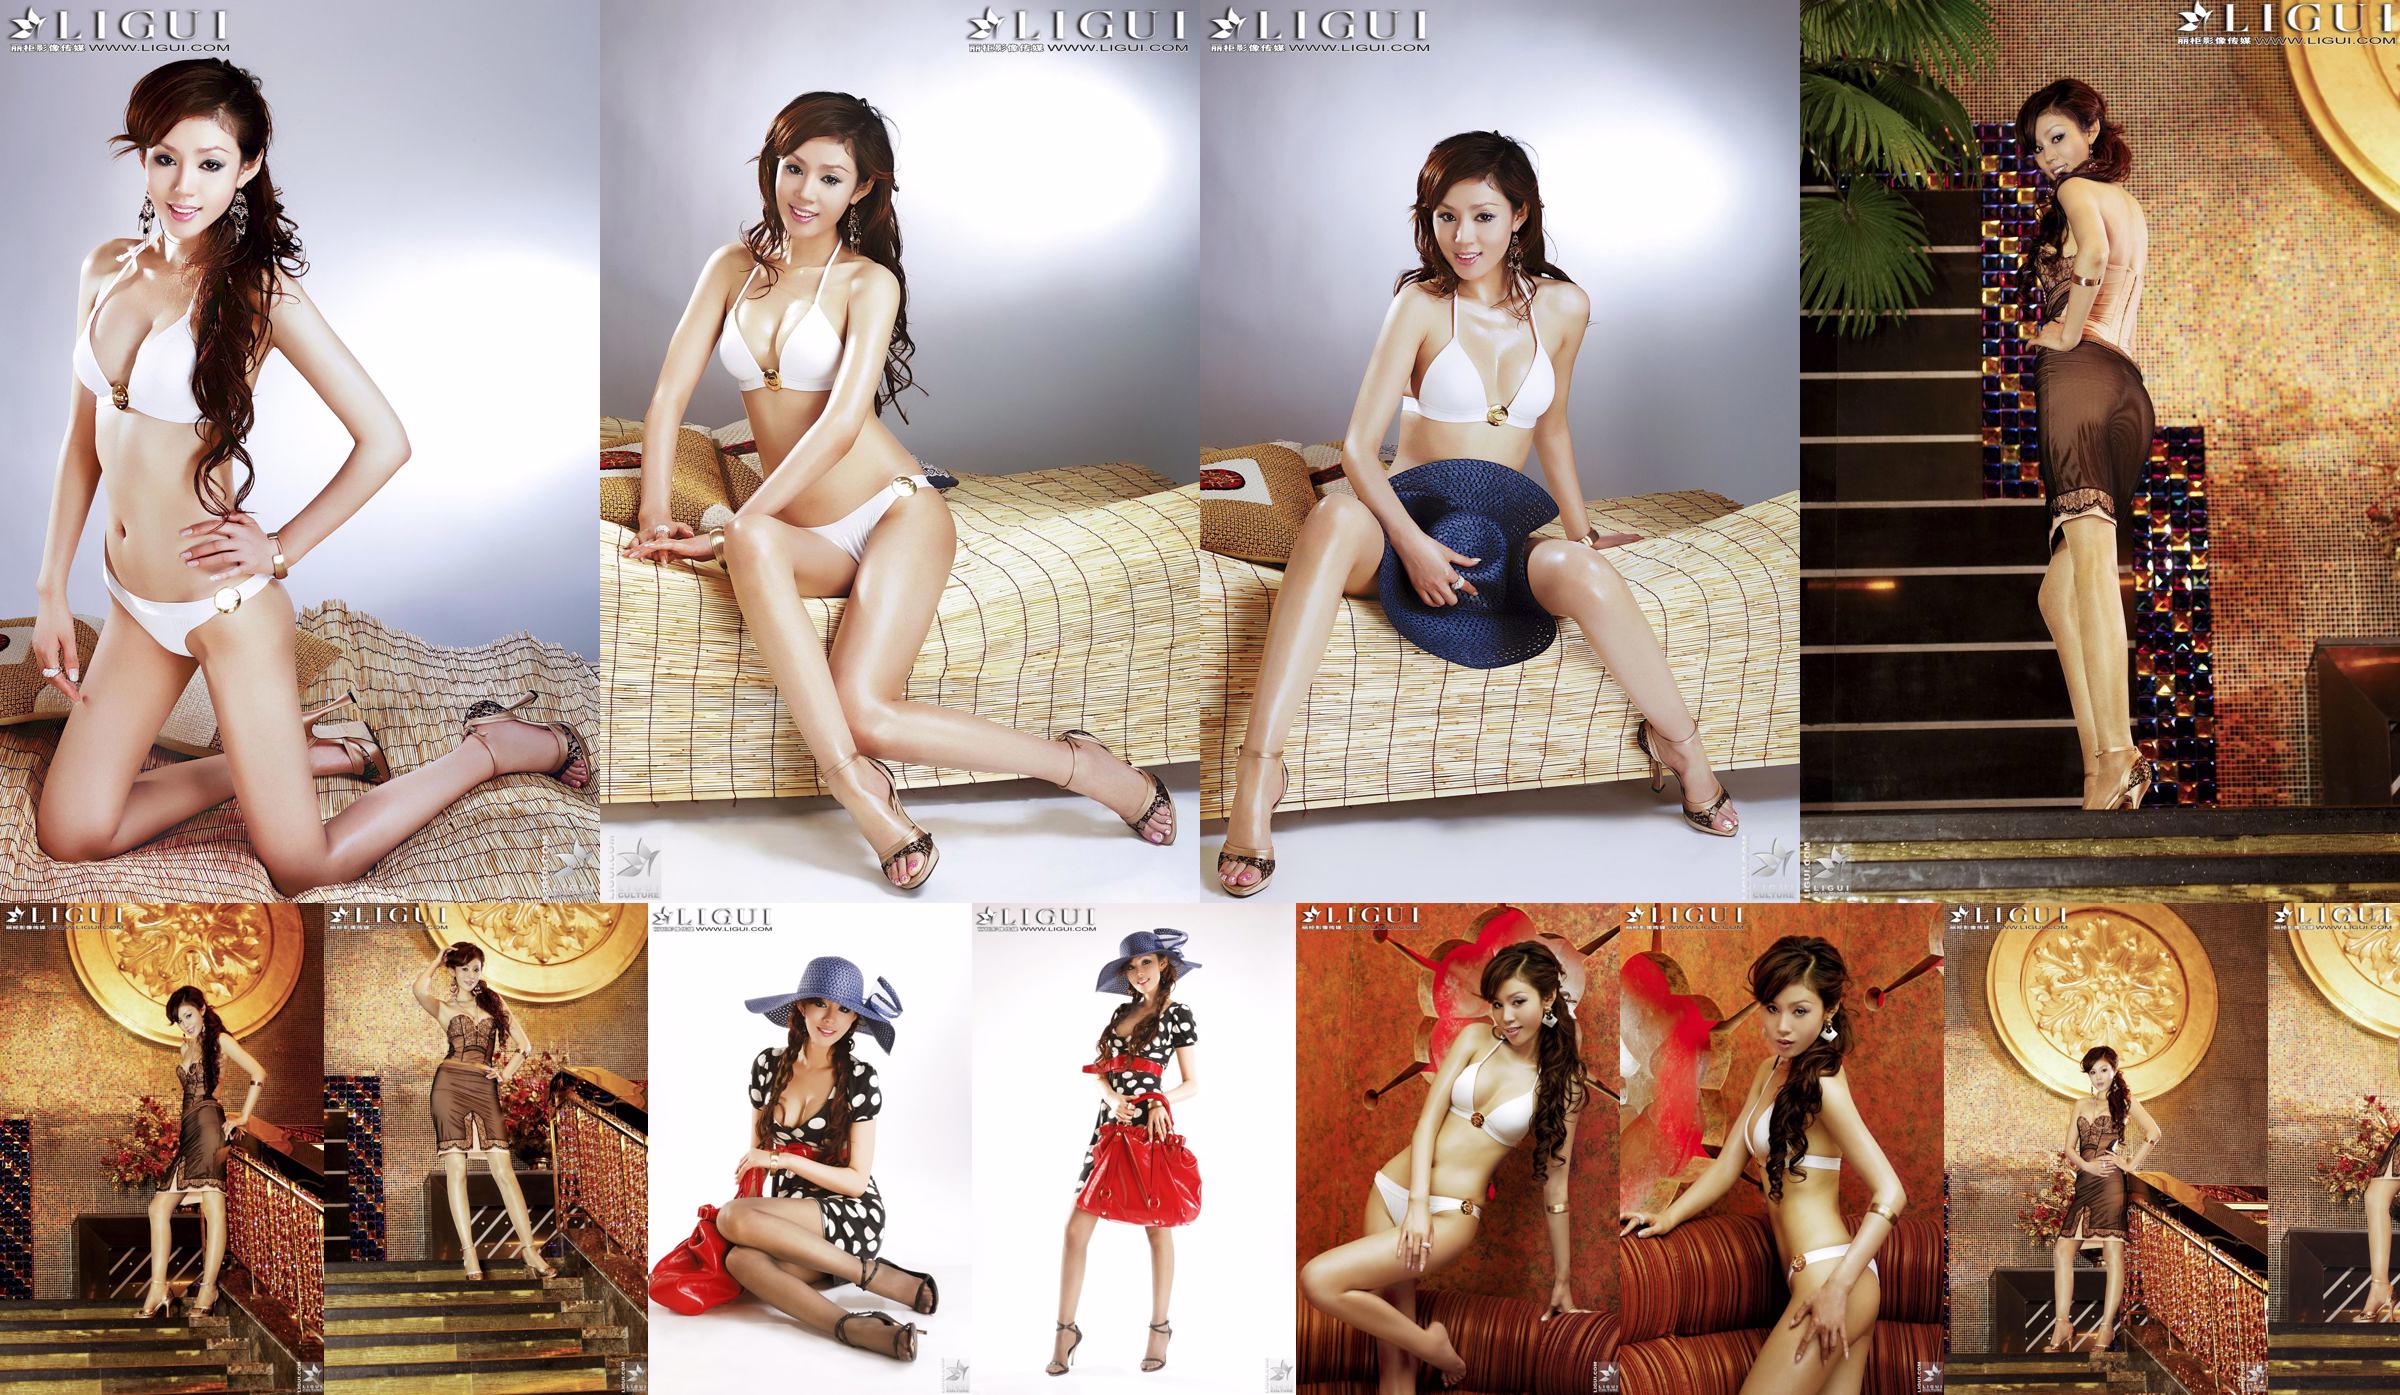 [丽柜LiGui] Model Yao Jinjin's "Bikini + Dress" Beautiful Legs and Silky Feet Photo Picture No.80ccb3 Page 17